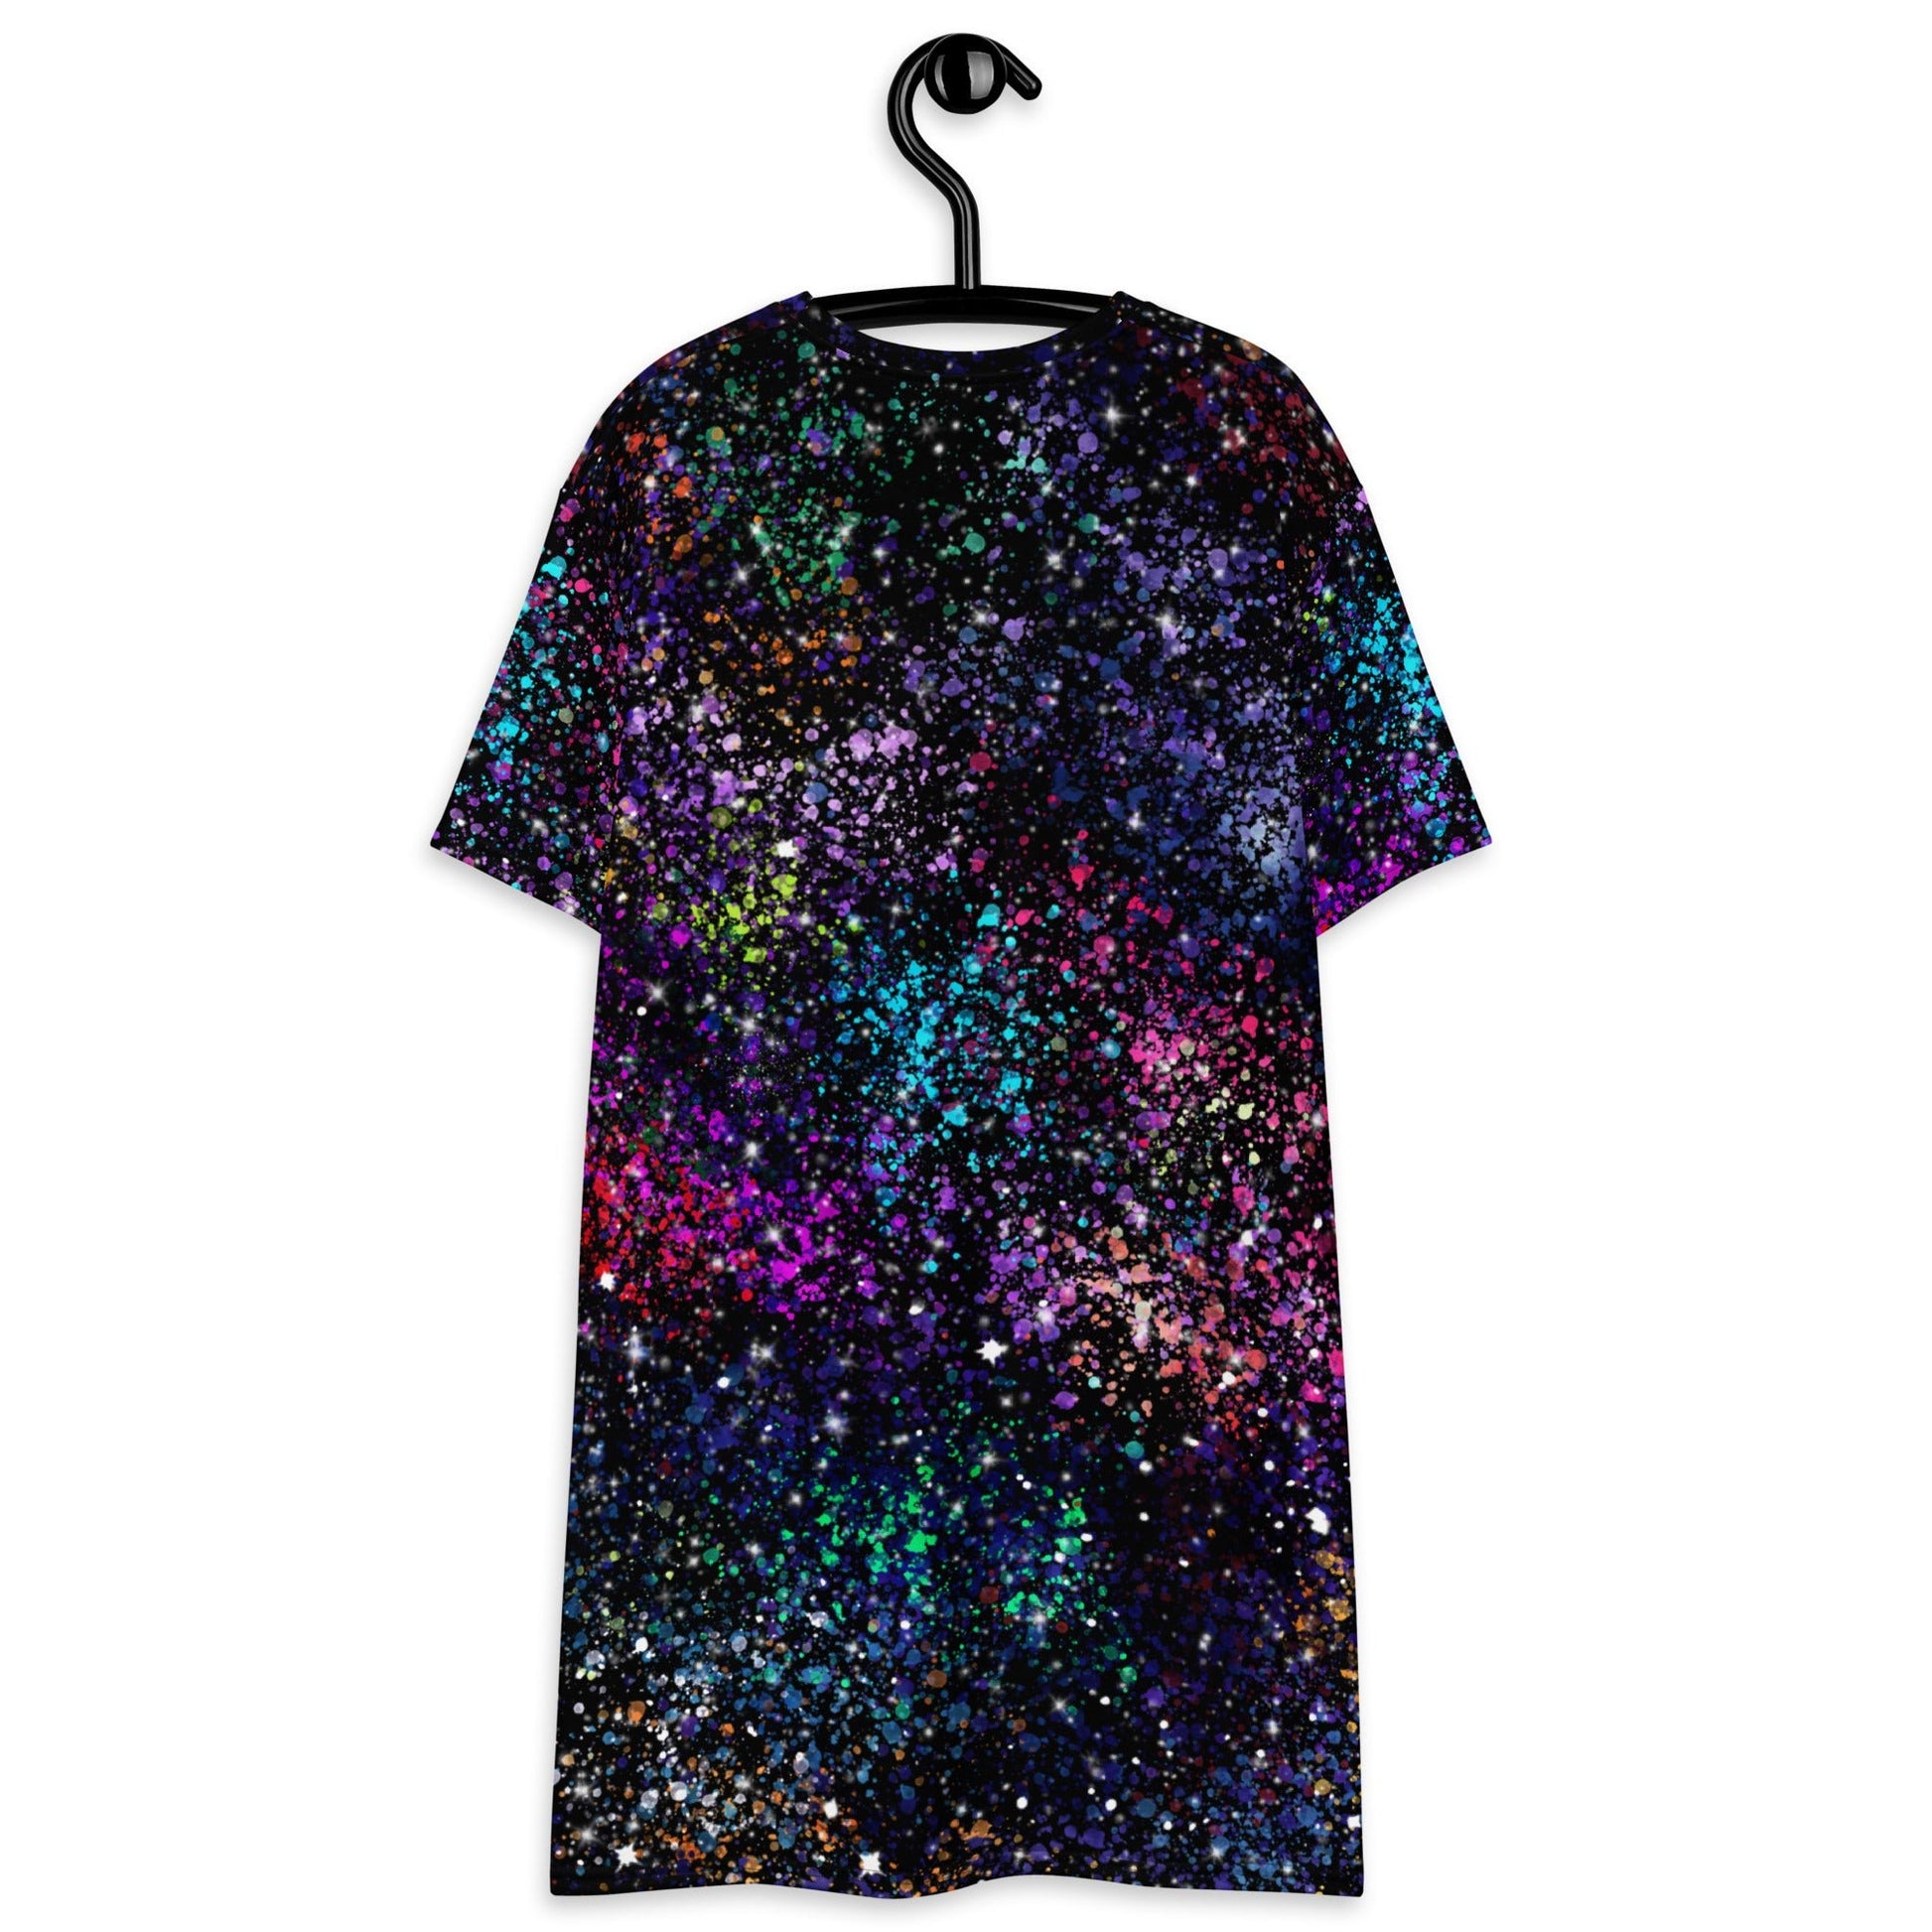 Farris Wheel Galaxy T-shirt Dress - BeExtra! Apparel & More